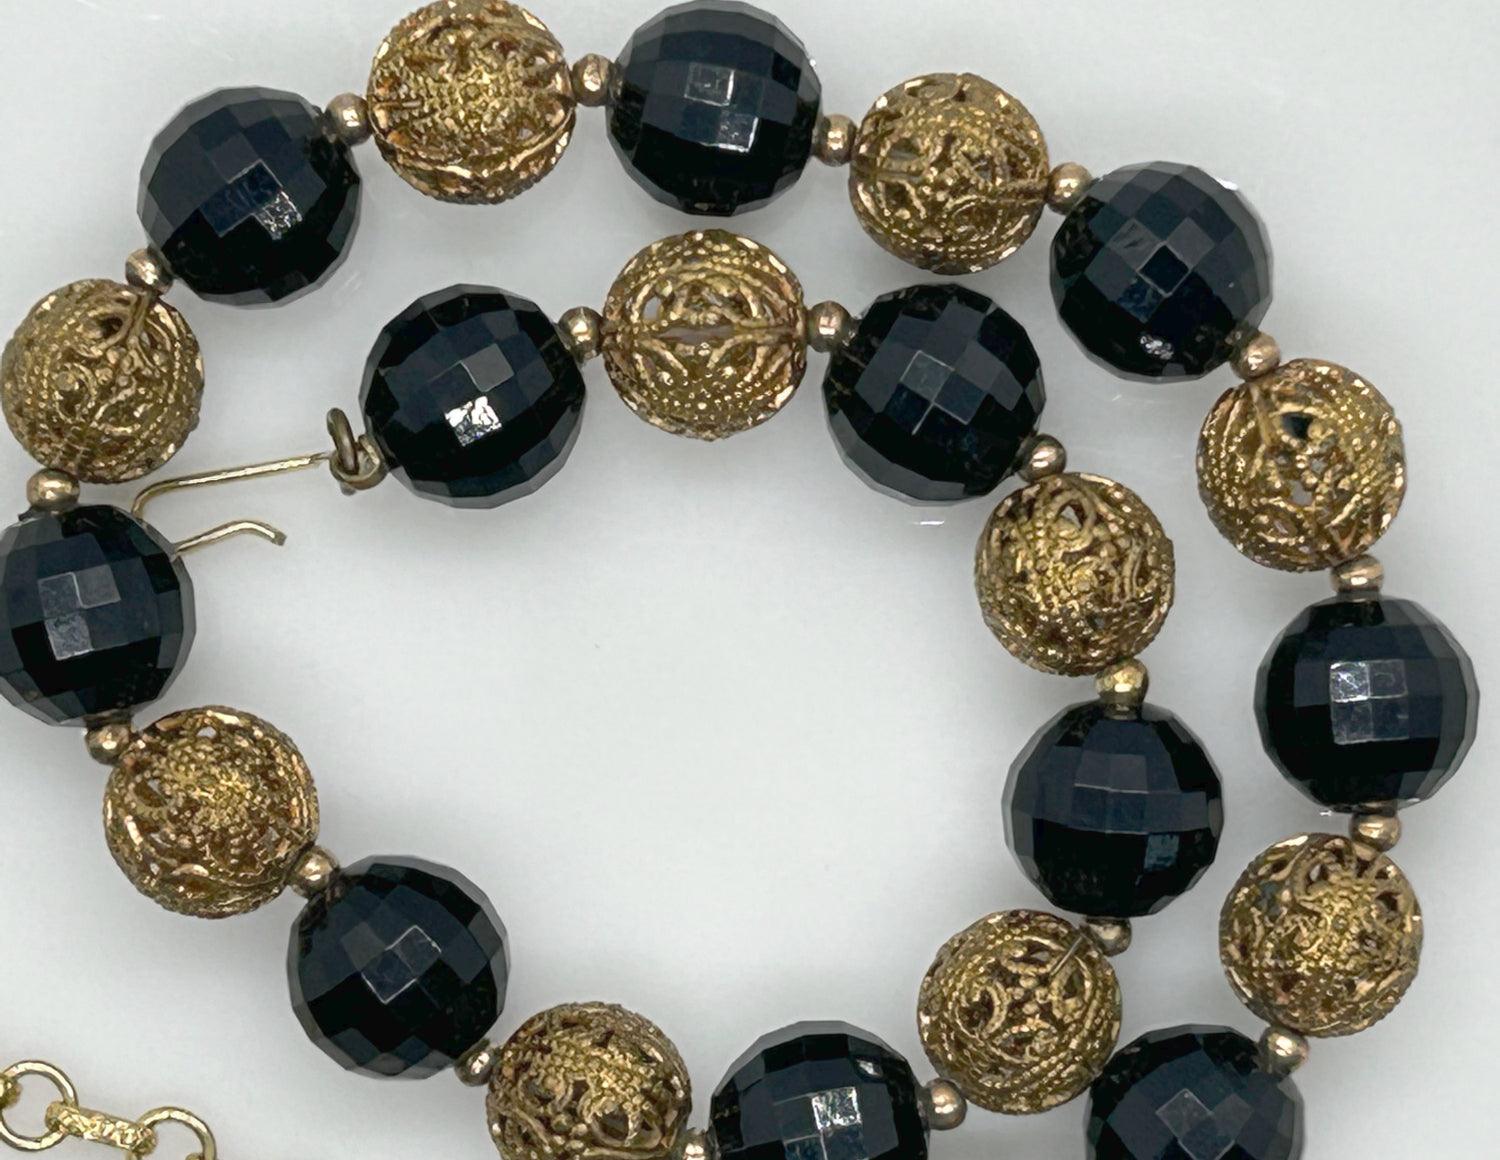 Vintage Filigree Necklace Choker with Black Beads and Filigree Beads - Lamoree’s Vintage